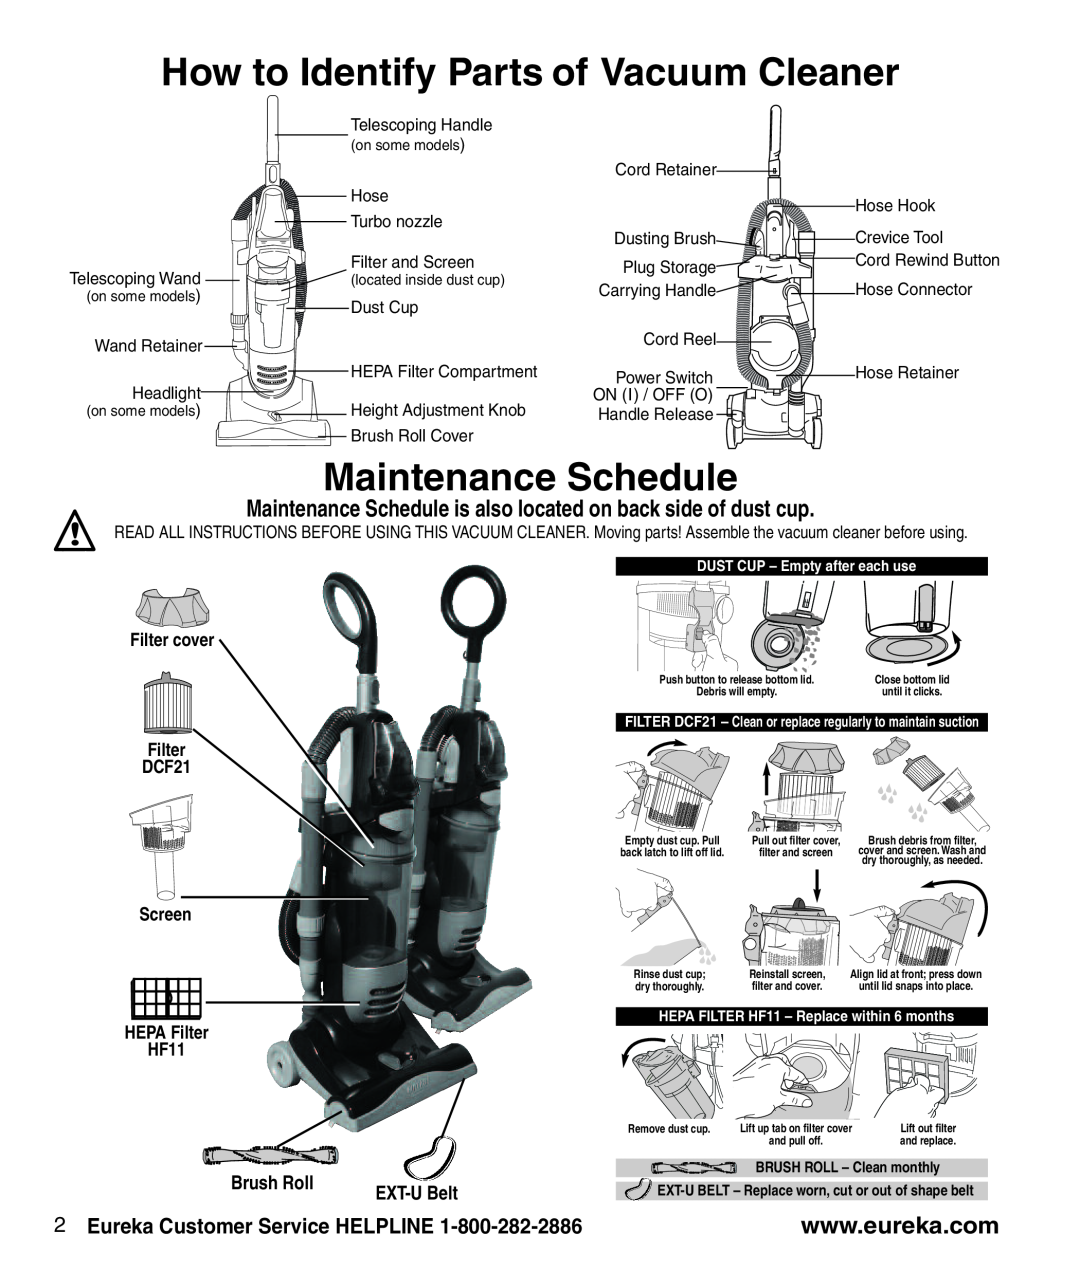 Eureka 4242A How to Identify Parts of Vacuum Cleaner, Maintenance Schedule, Eureka Customer Service HELPLINE, Brush Roll 